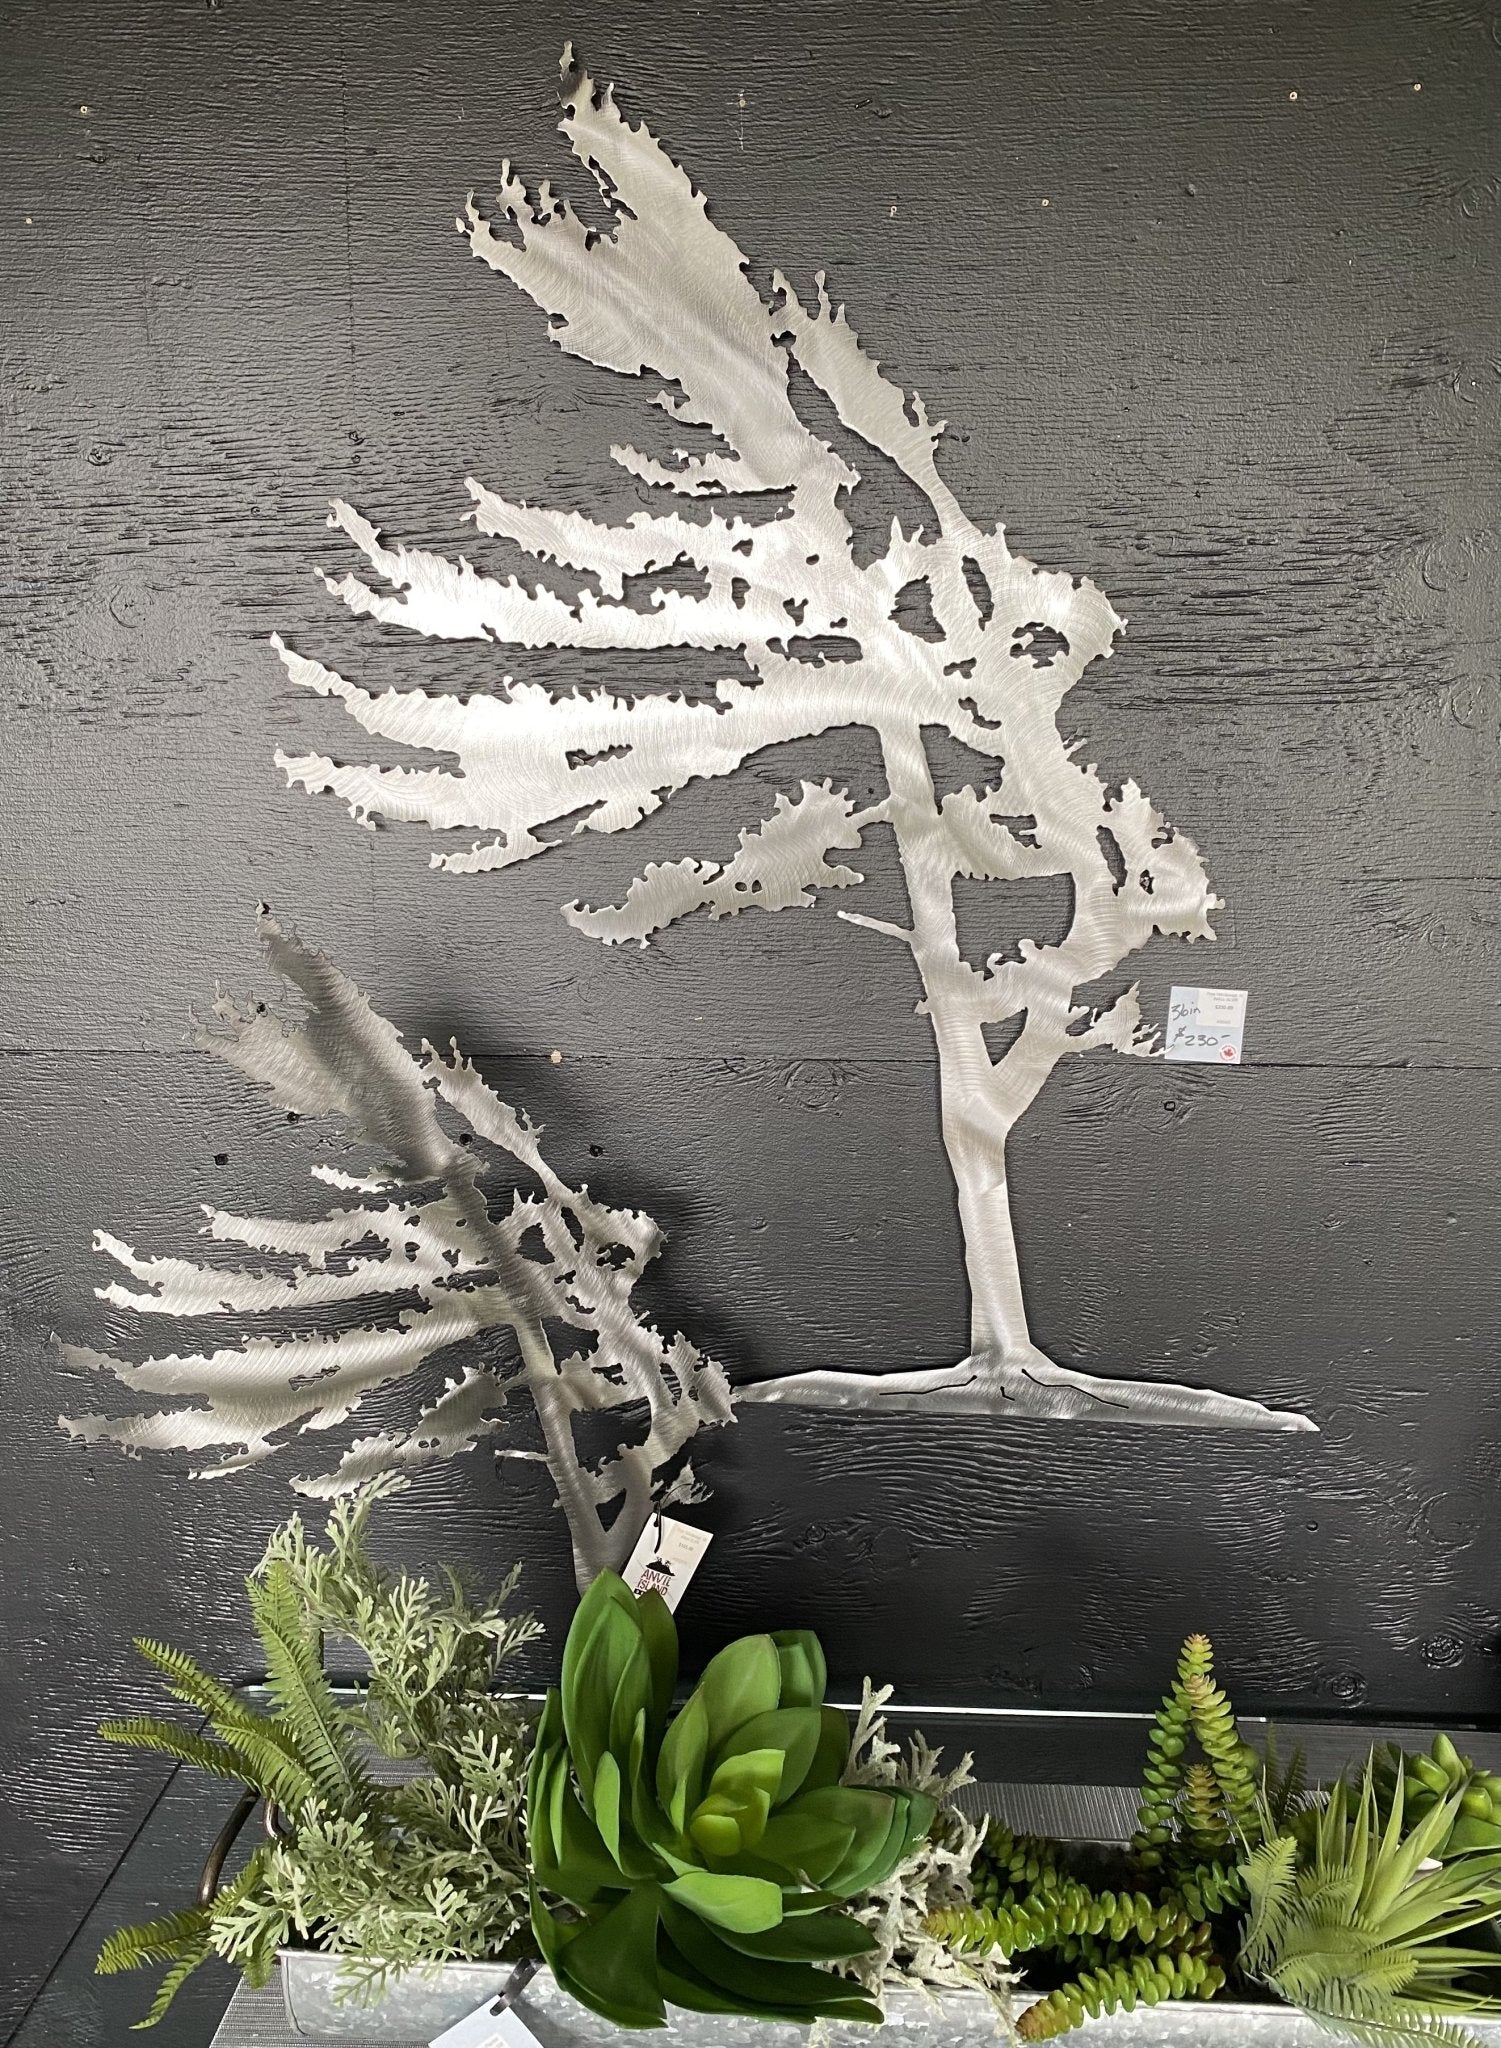 tree art on metal stand